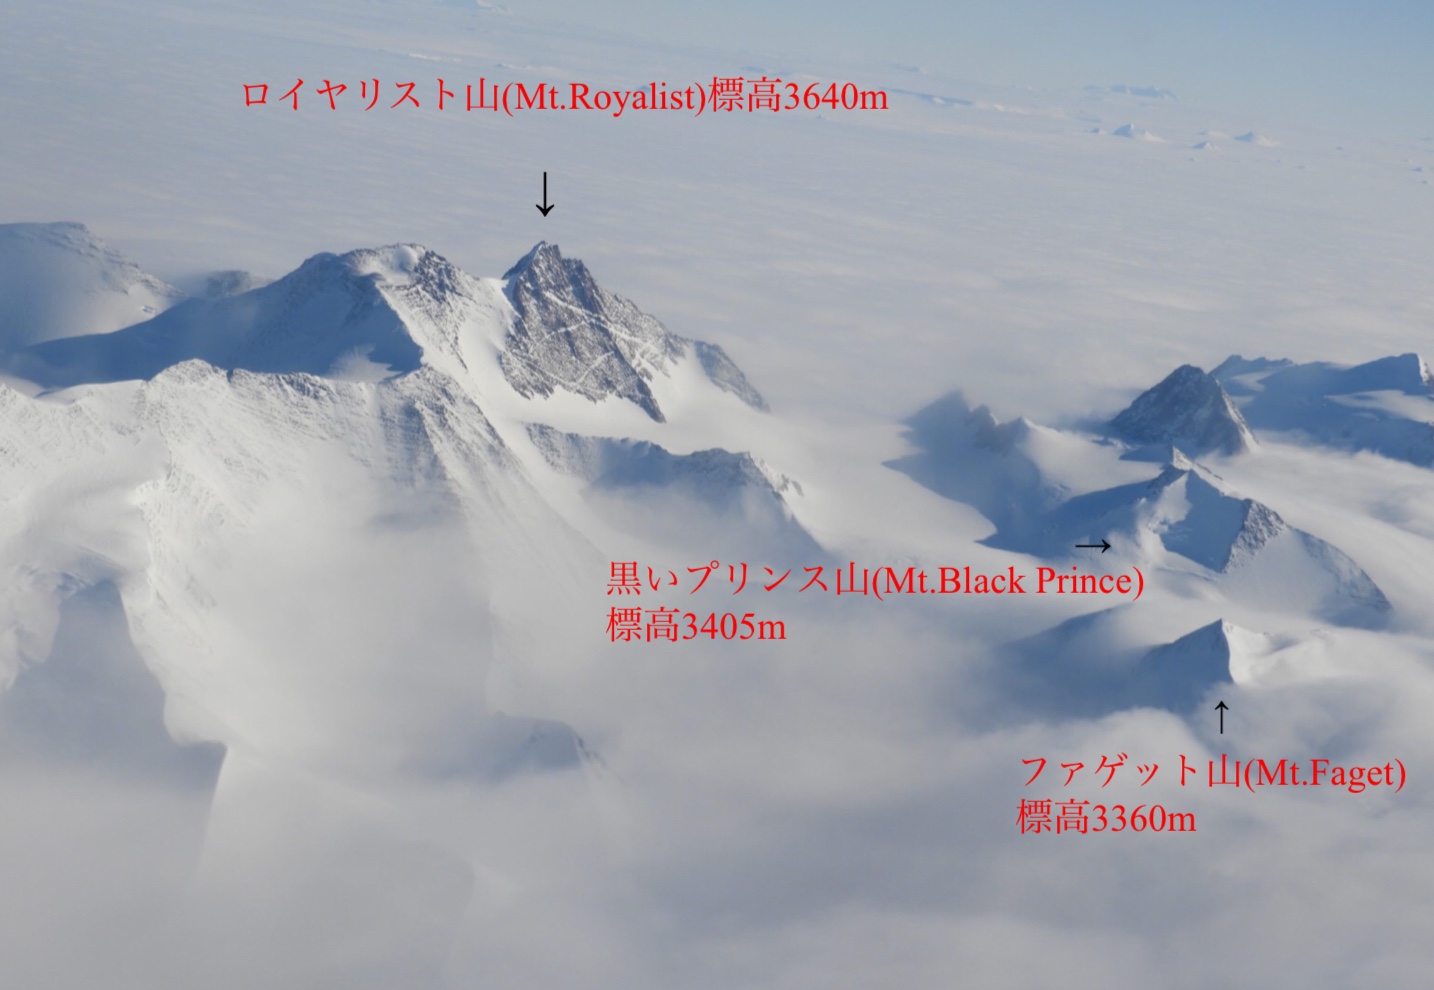  Mount Royalist, Mount Black Prince,Mount Faget,
Antarctica,南極の山々